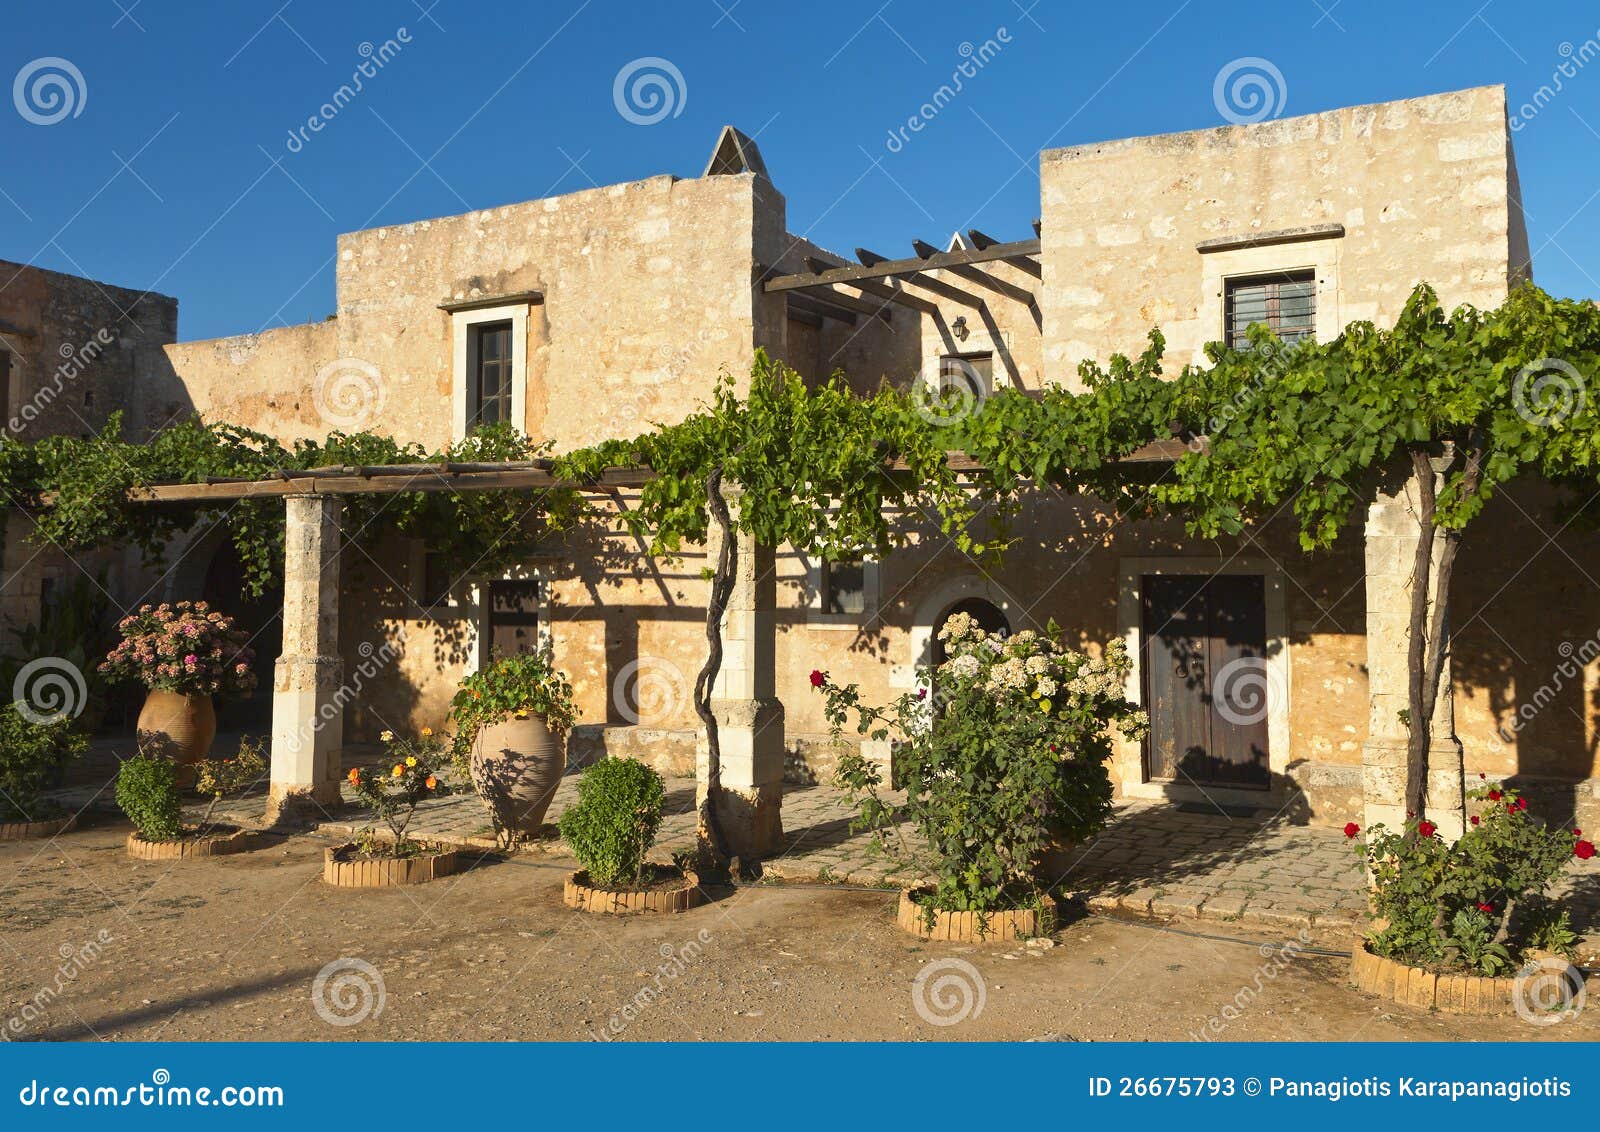  Traditional Houses At Crete Island Greece Stock Photos 